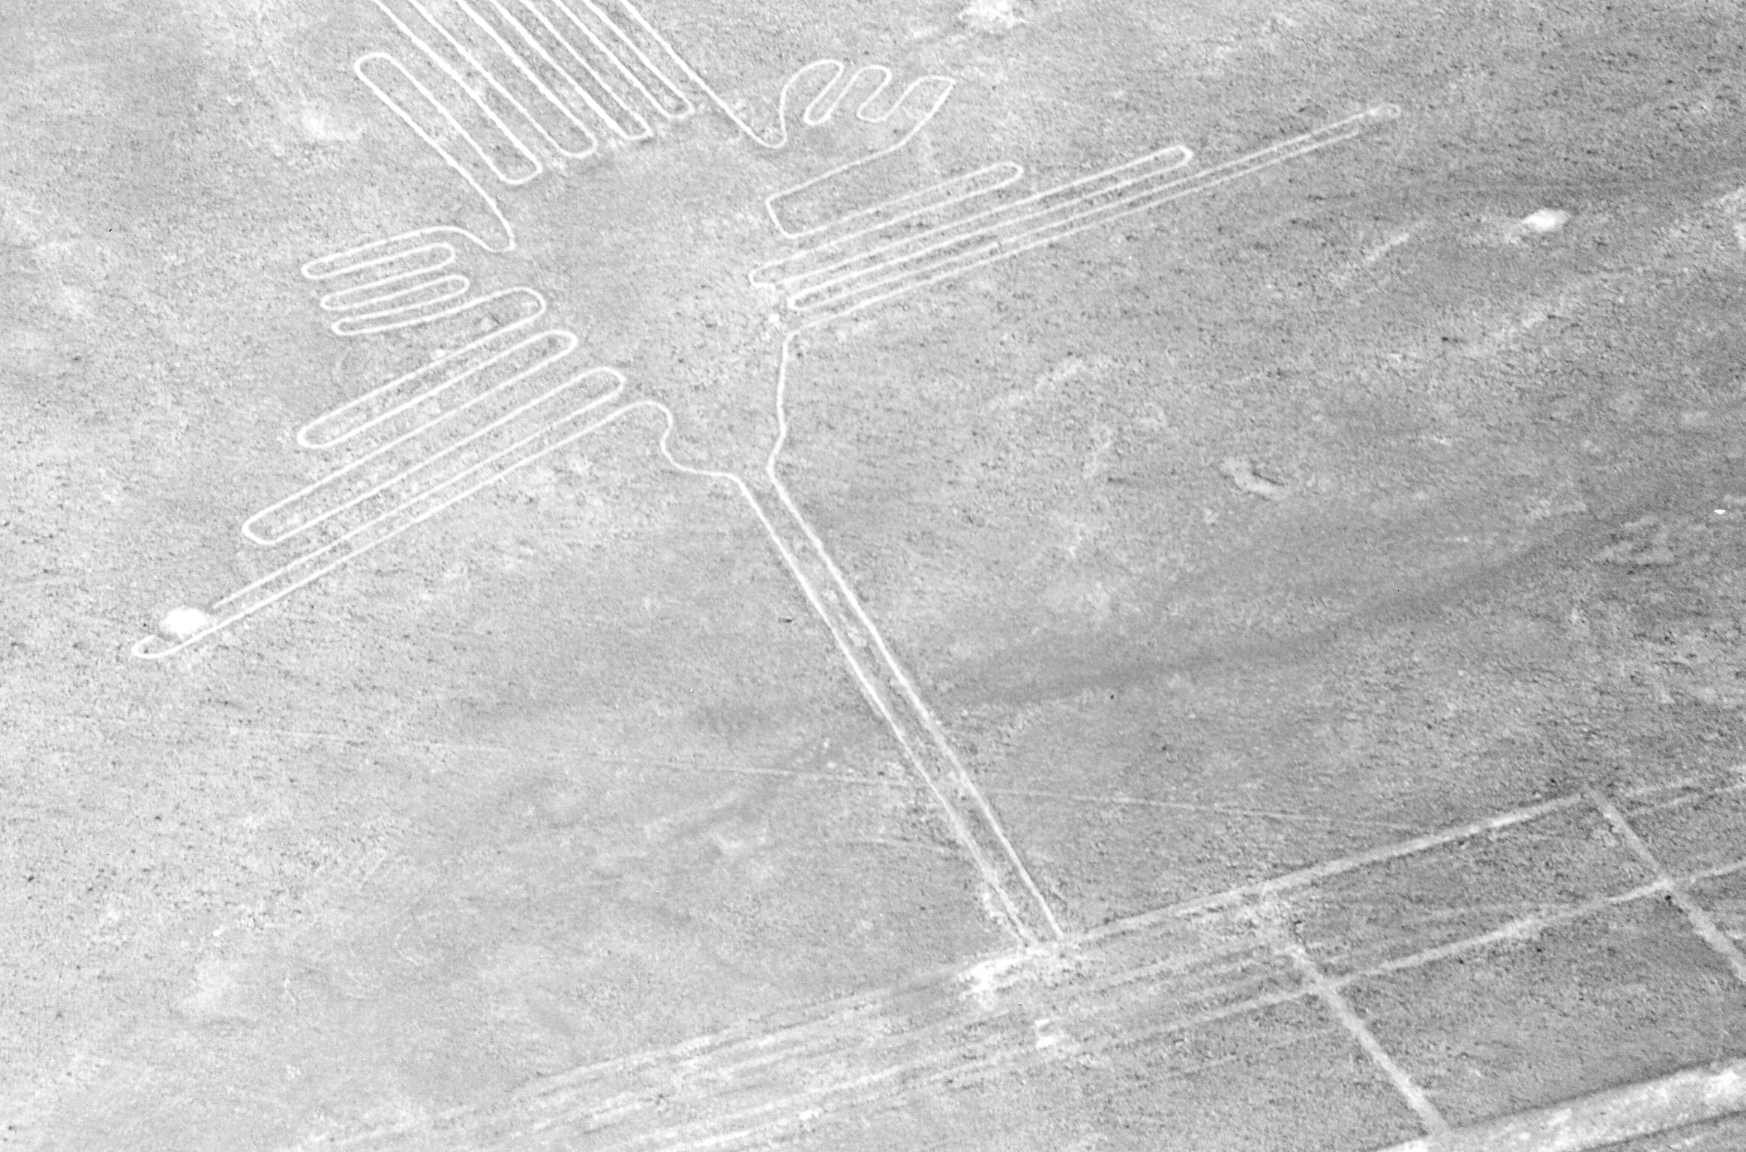 Nazca_lines_bird.jpg